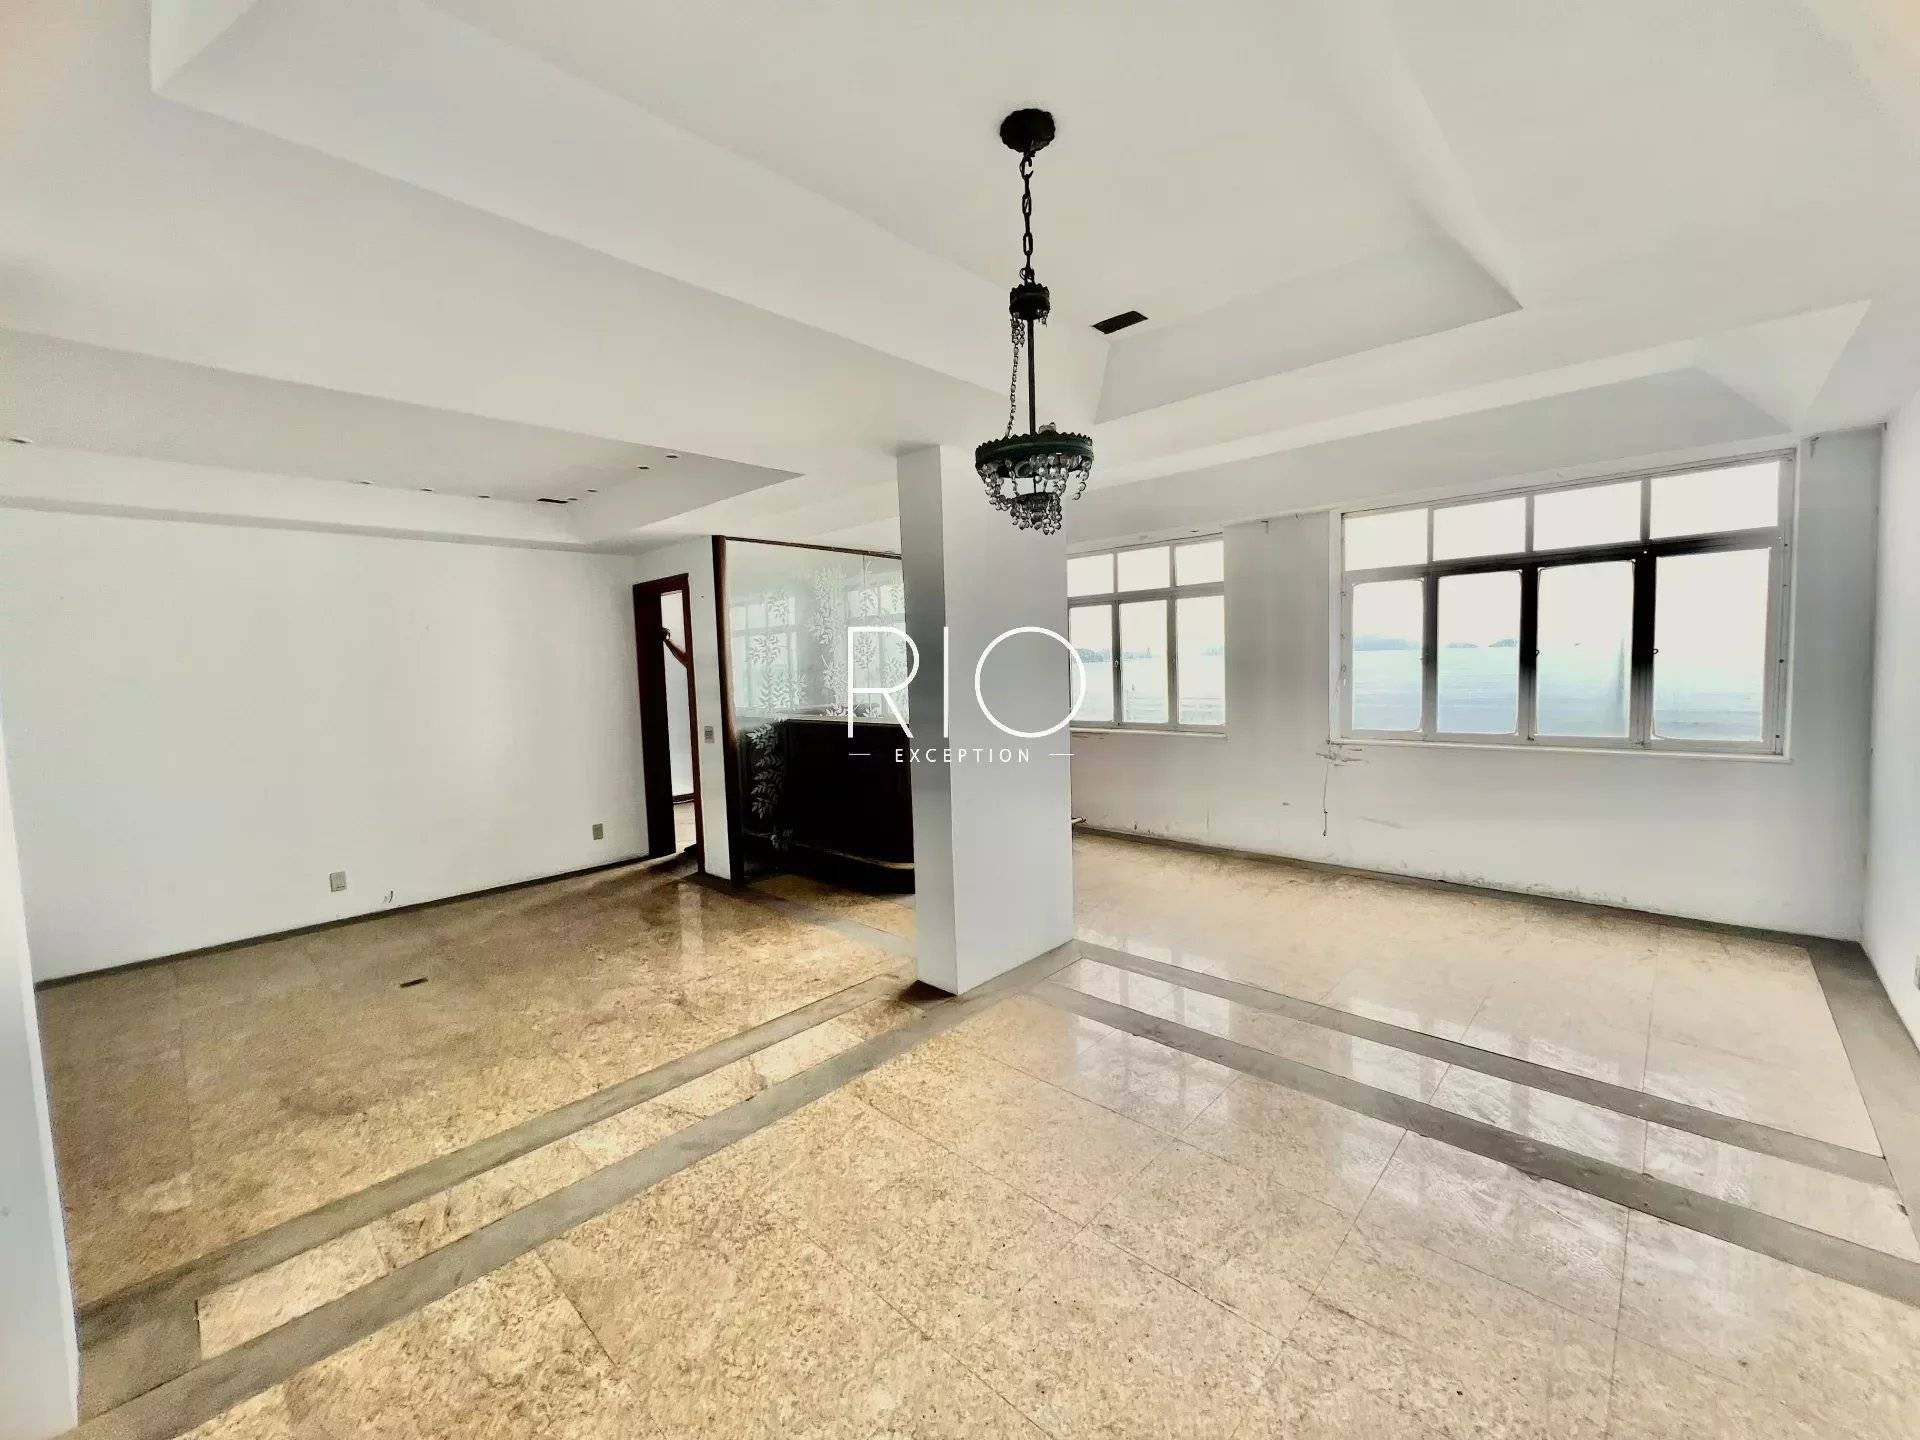 COPACABANA / Av. Atlântica, Poste 5, 224m2 apartment to renovate - Full sea view !